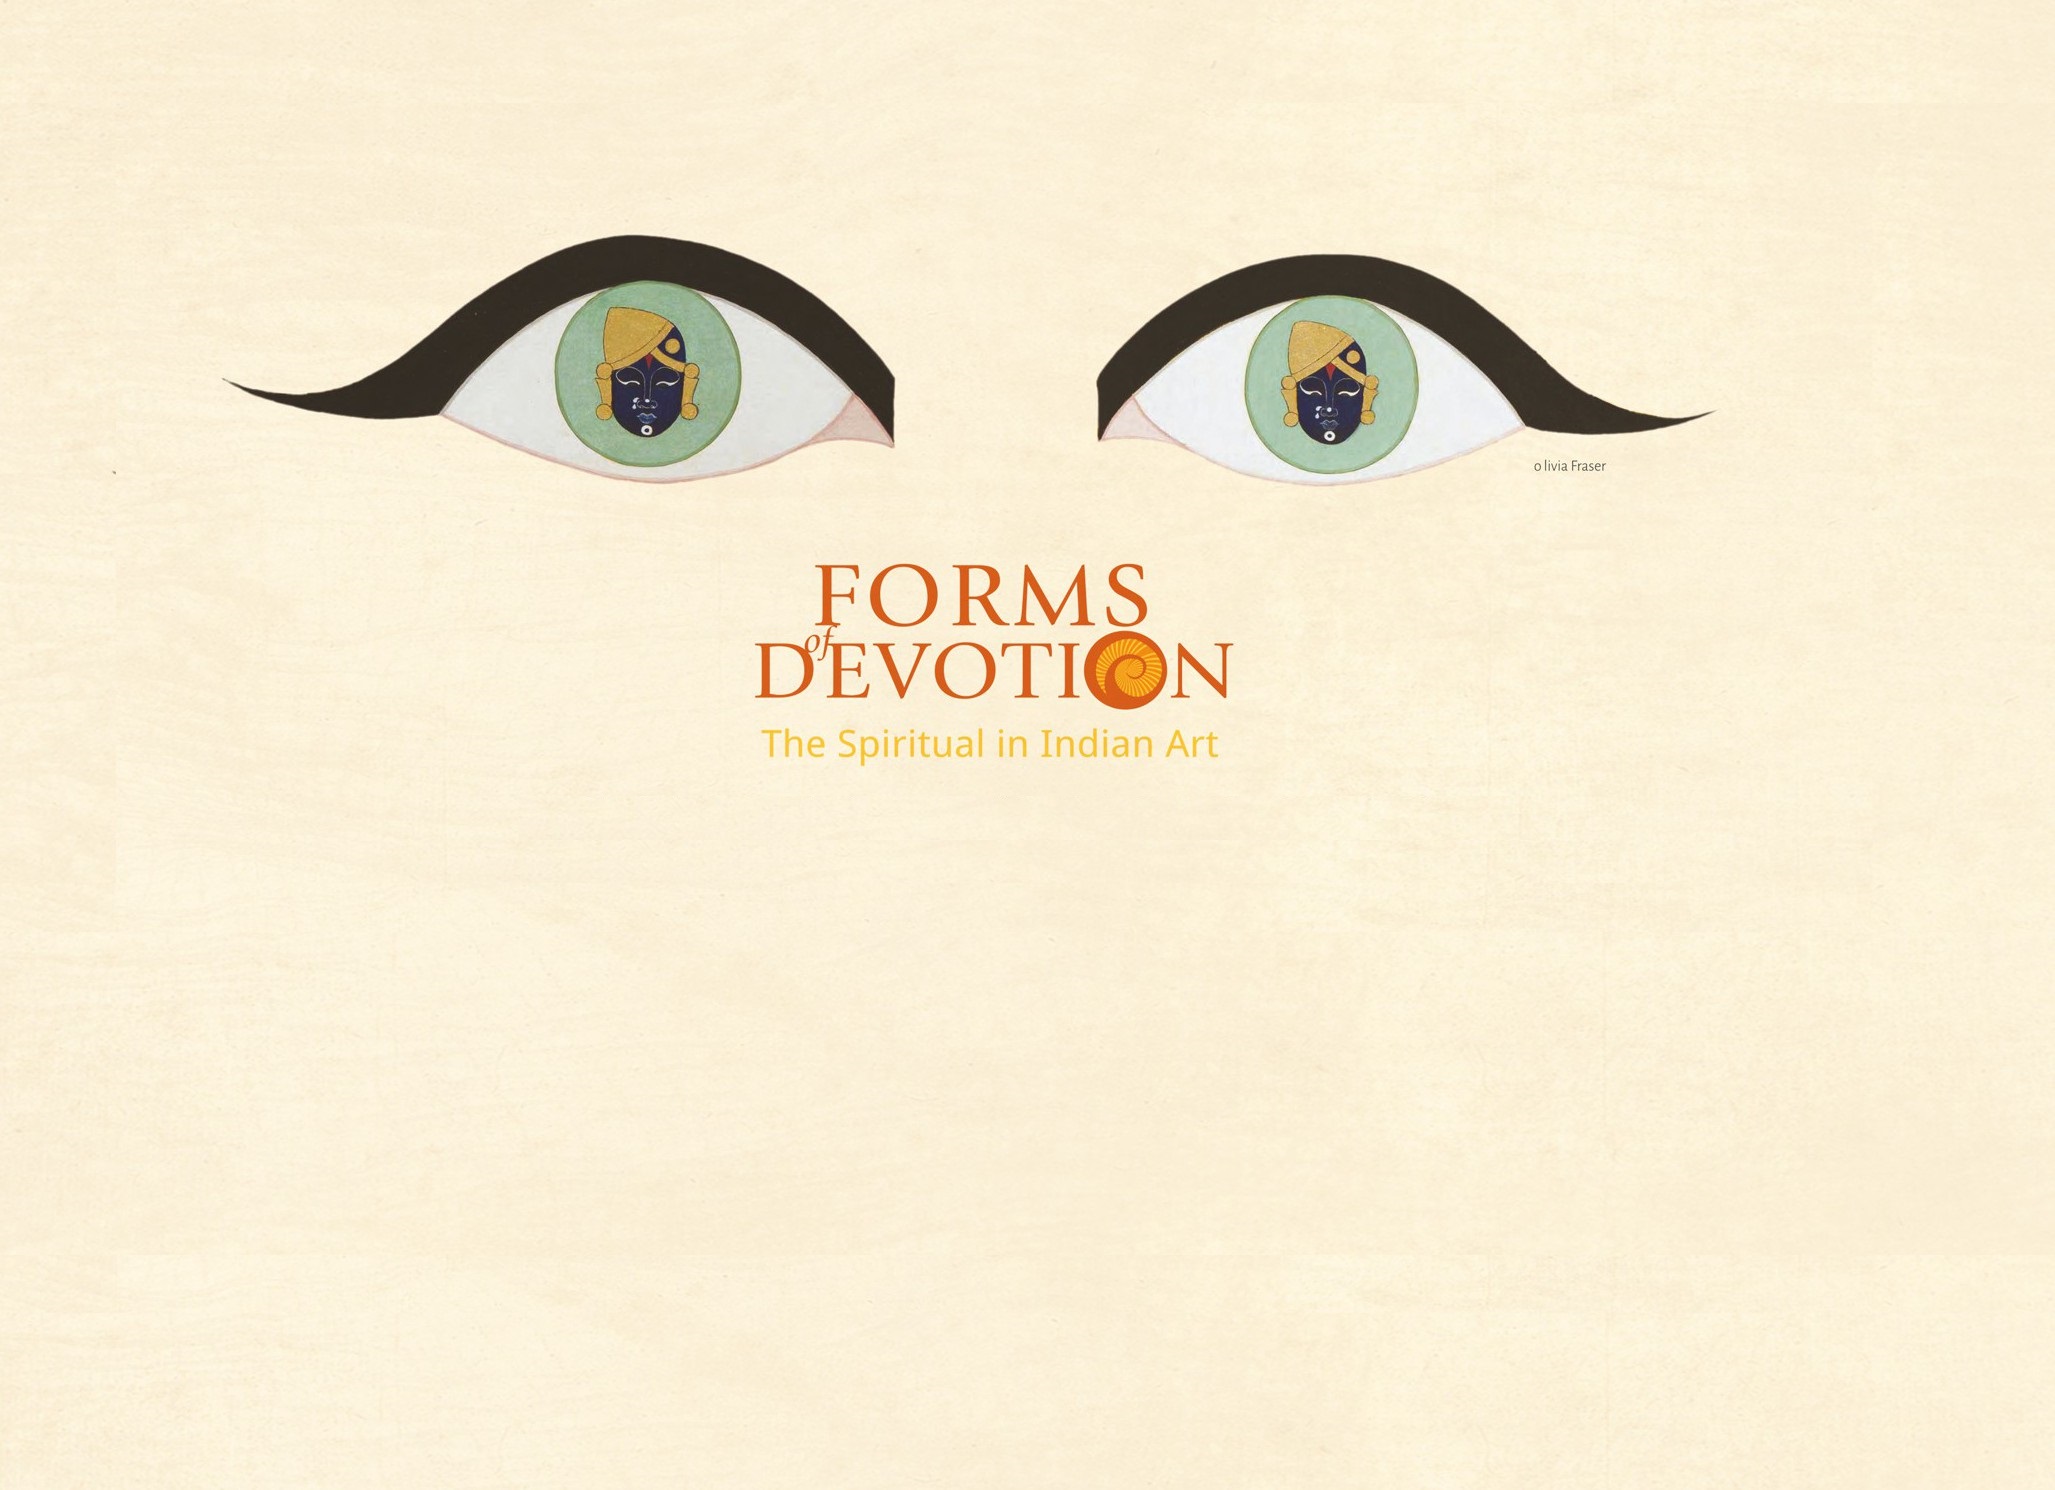 Visit Forms of Devotion